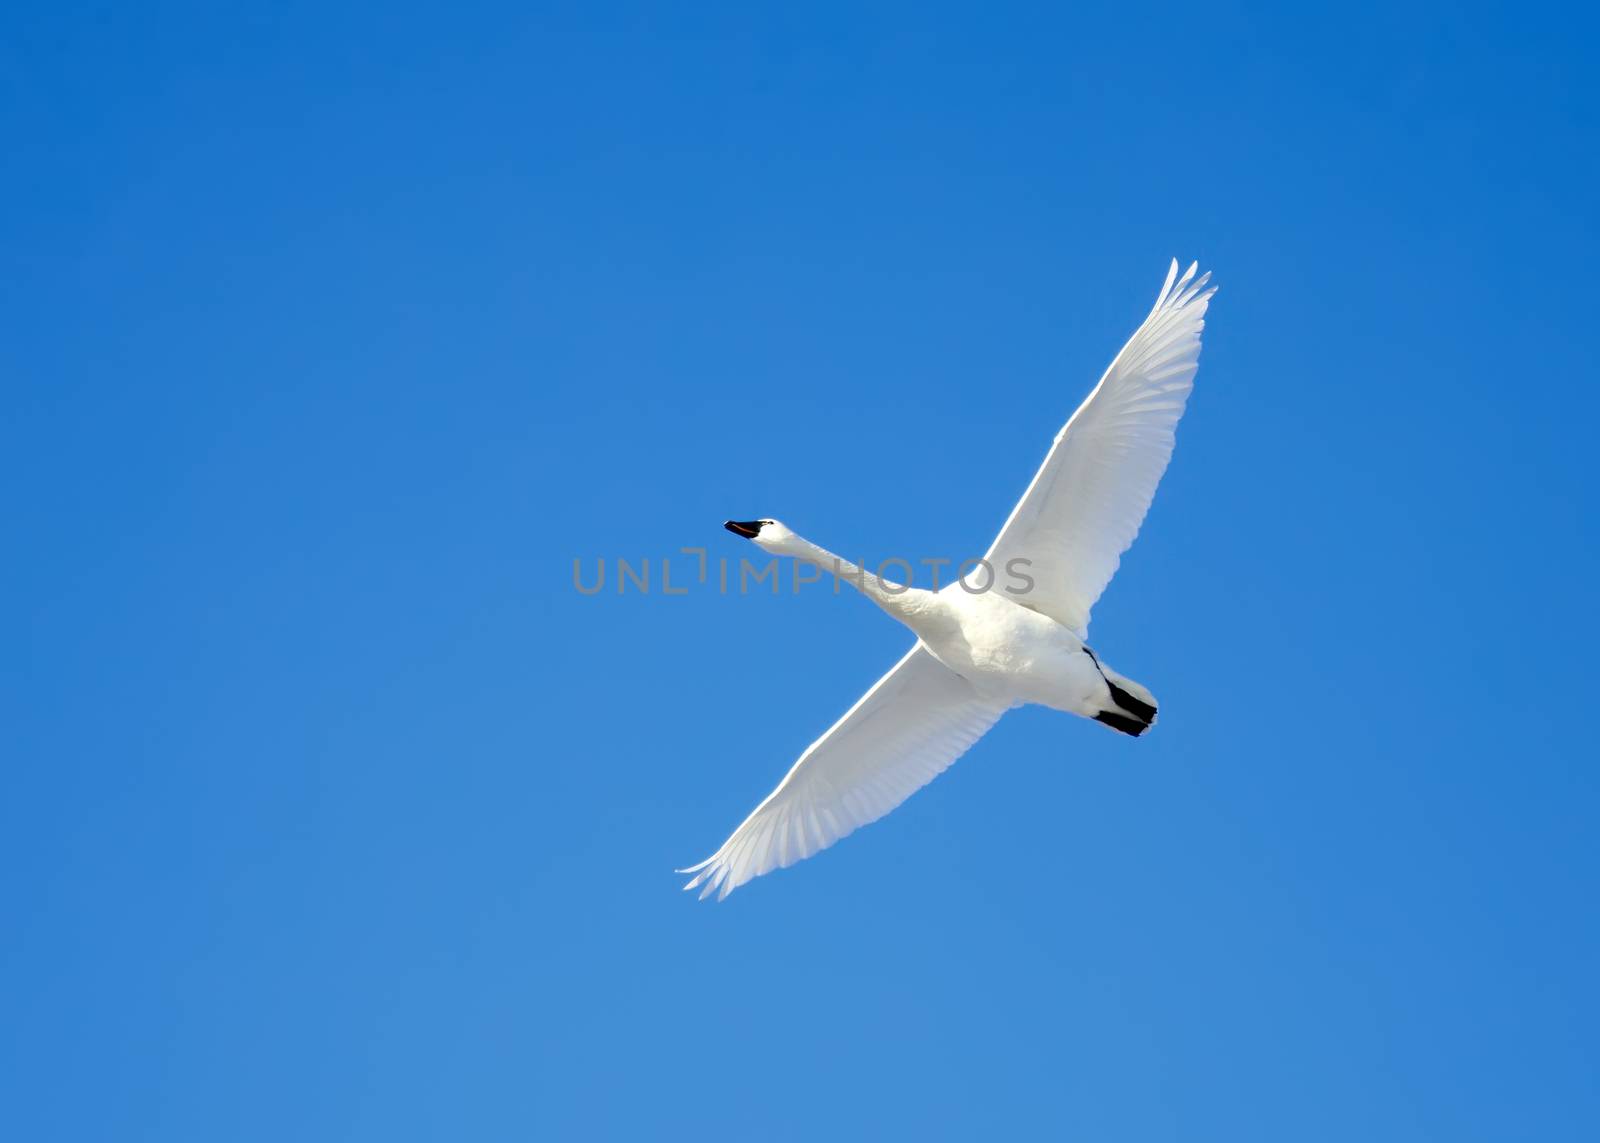 A Tundra Swan flies in a clear blue winter sky.